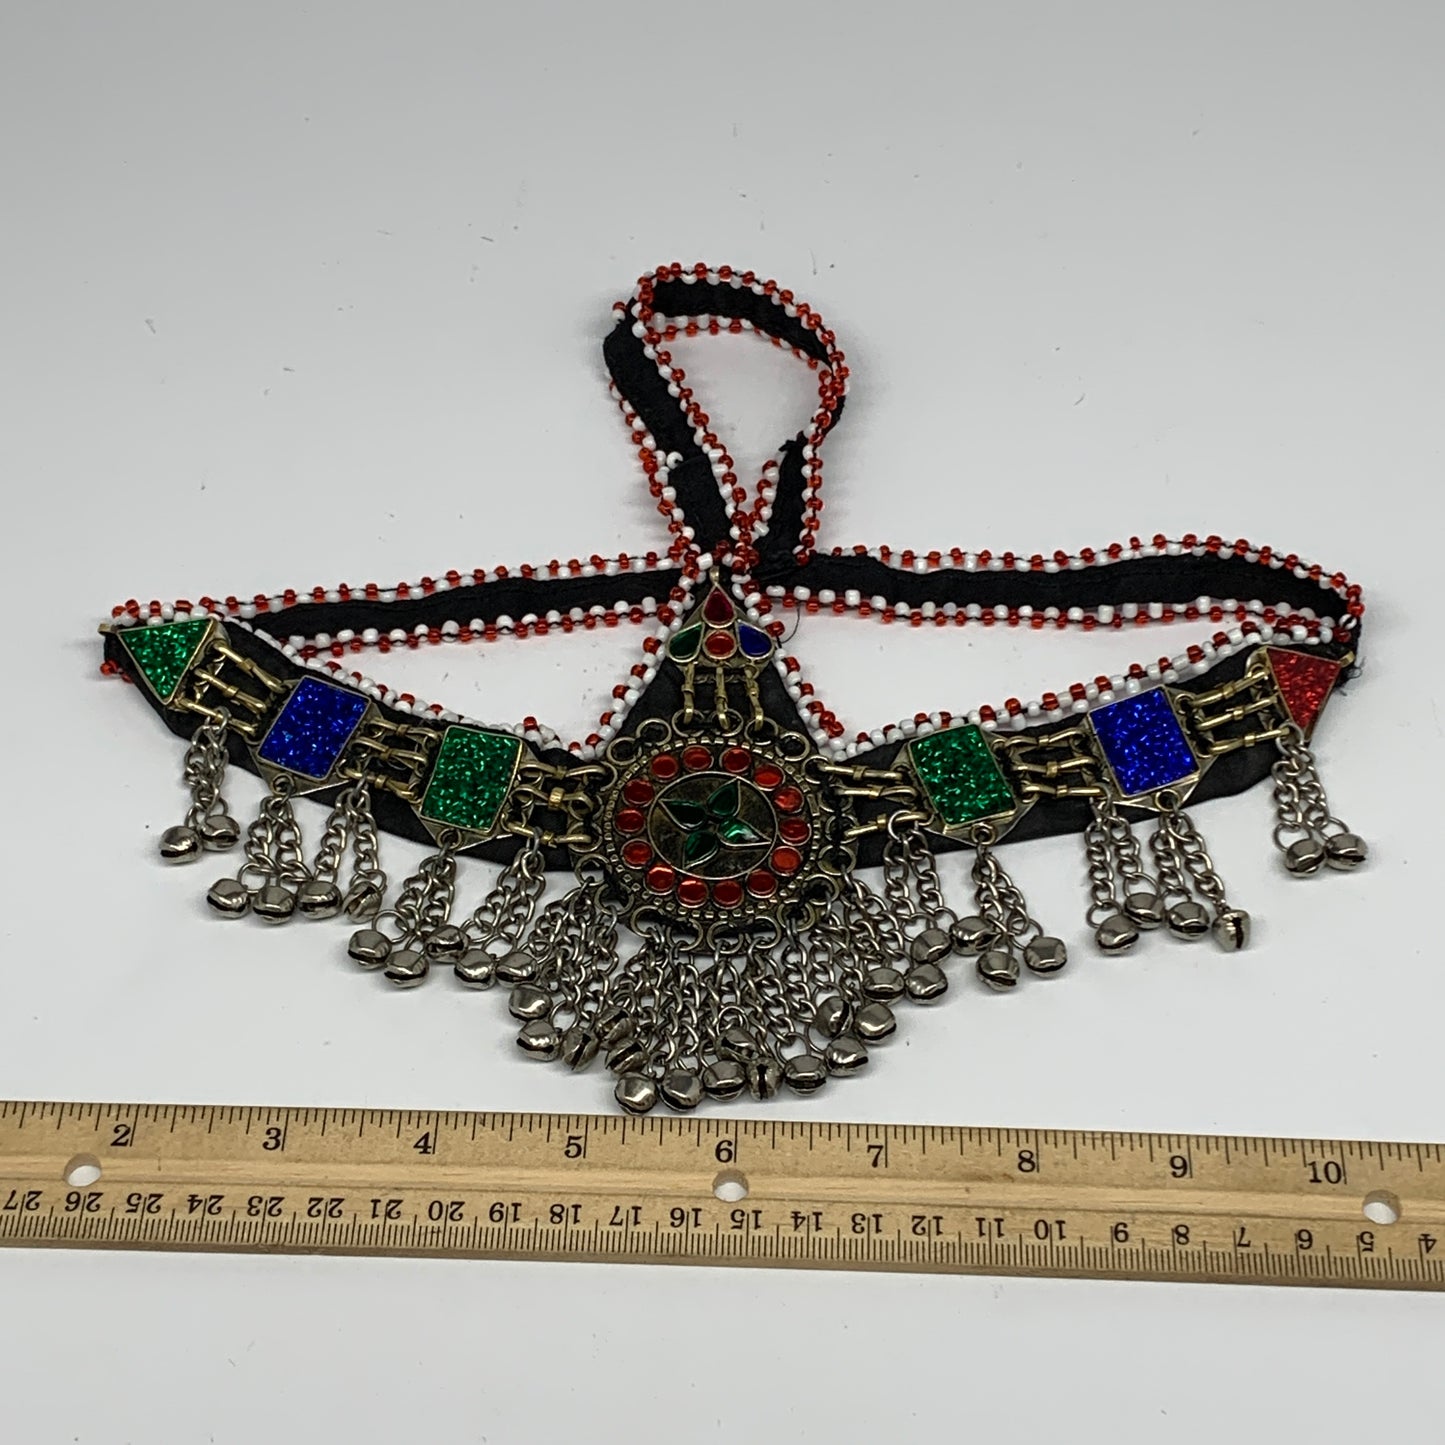 84.3g, Kuchi Headdress Headpiece Afghan Ethnic Tribal Jingle Bells @Afghanistan,